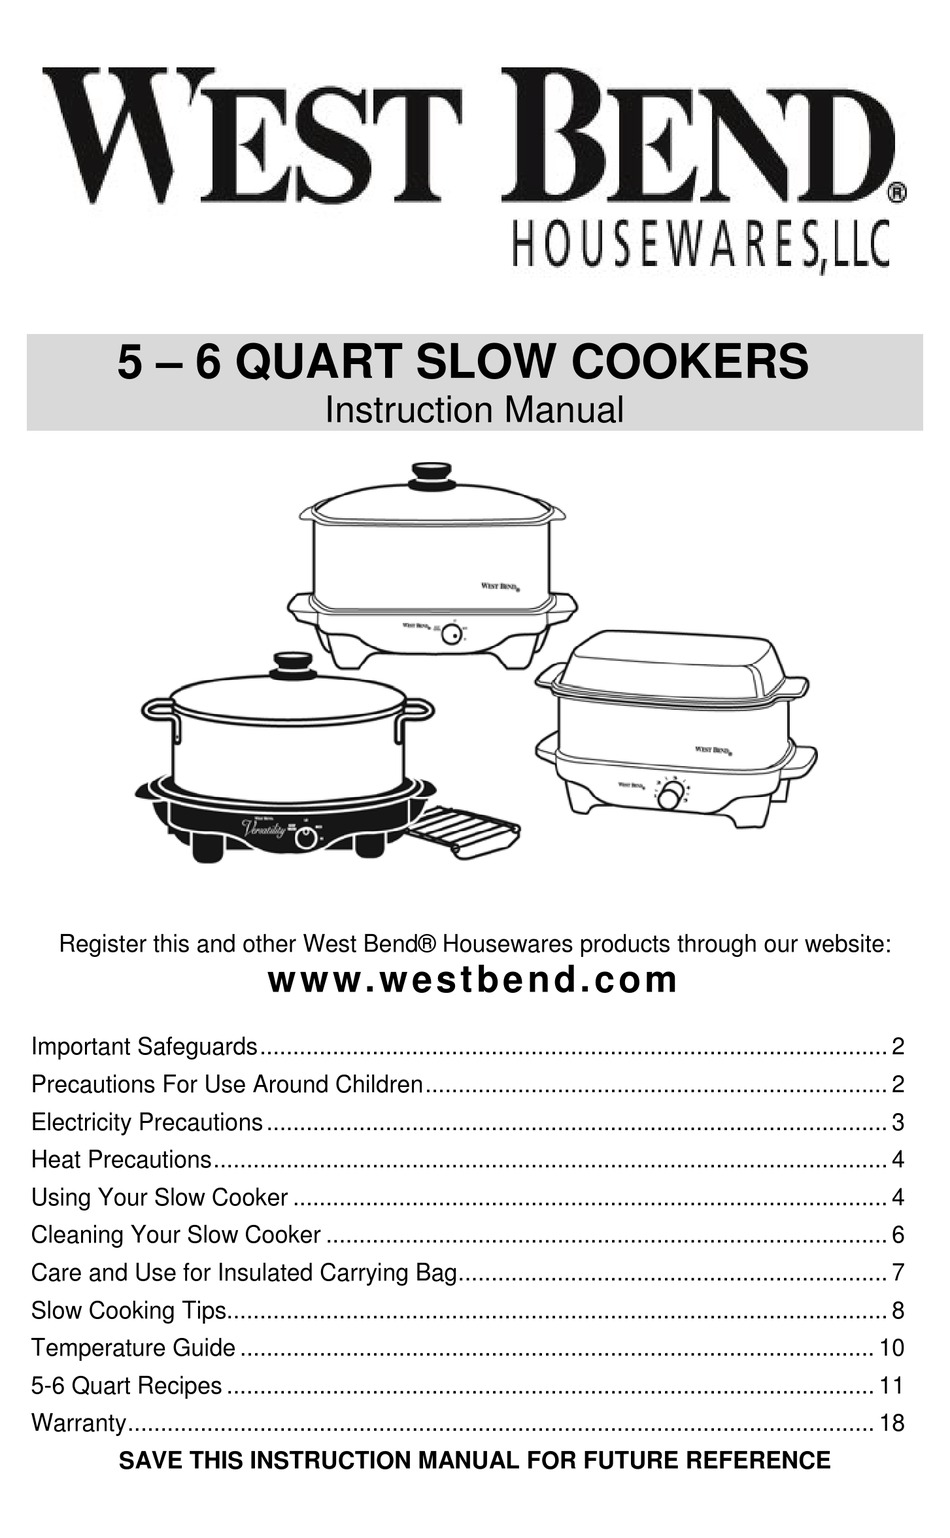 west-bend-5-6-quart-slow-cookers-instruction-manual-pdf-download